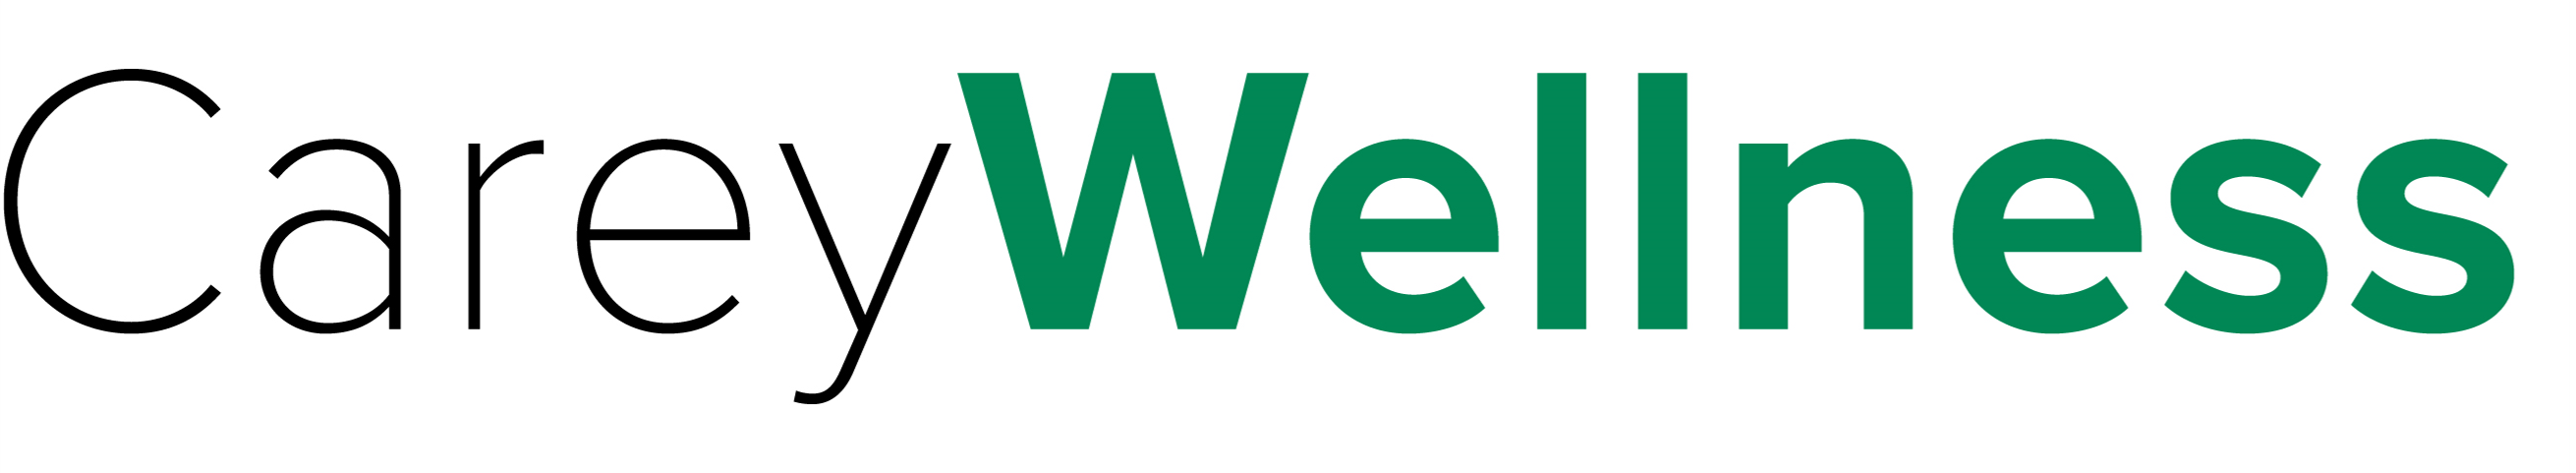 CareyWellness logo